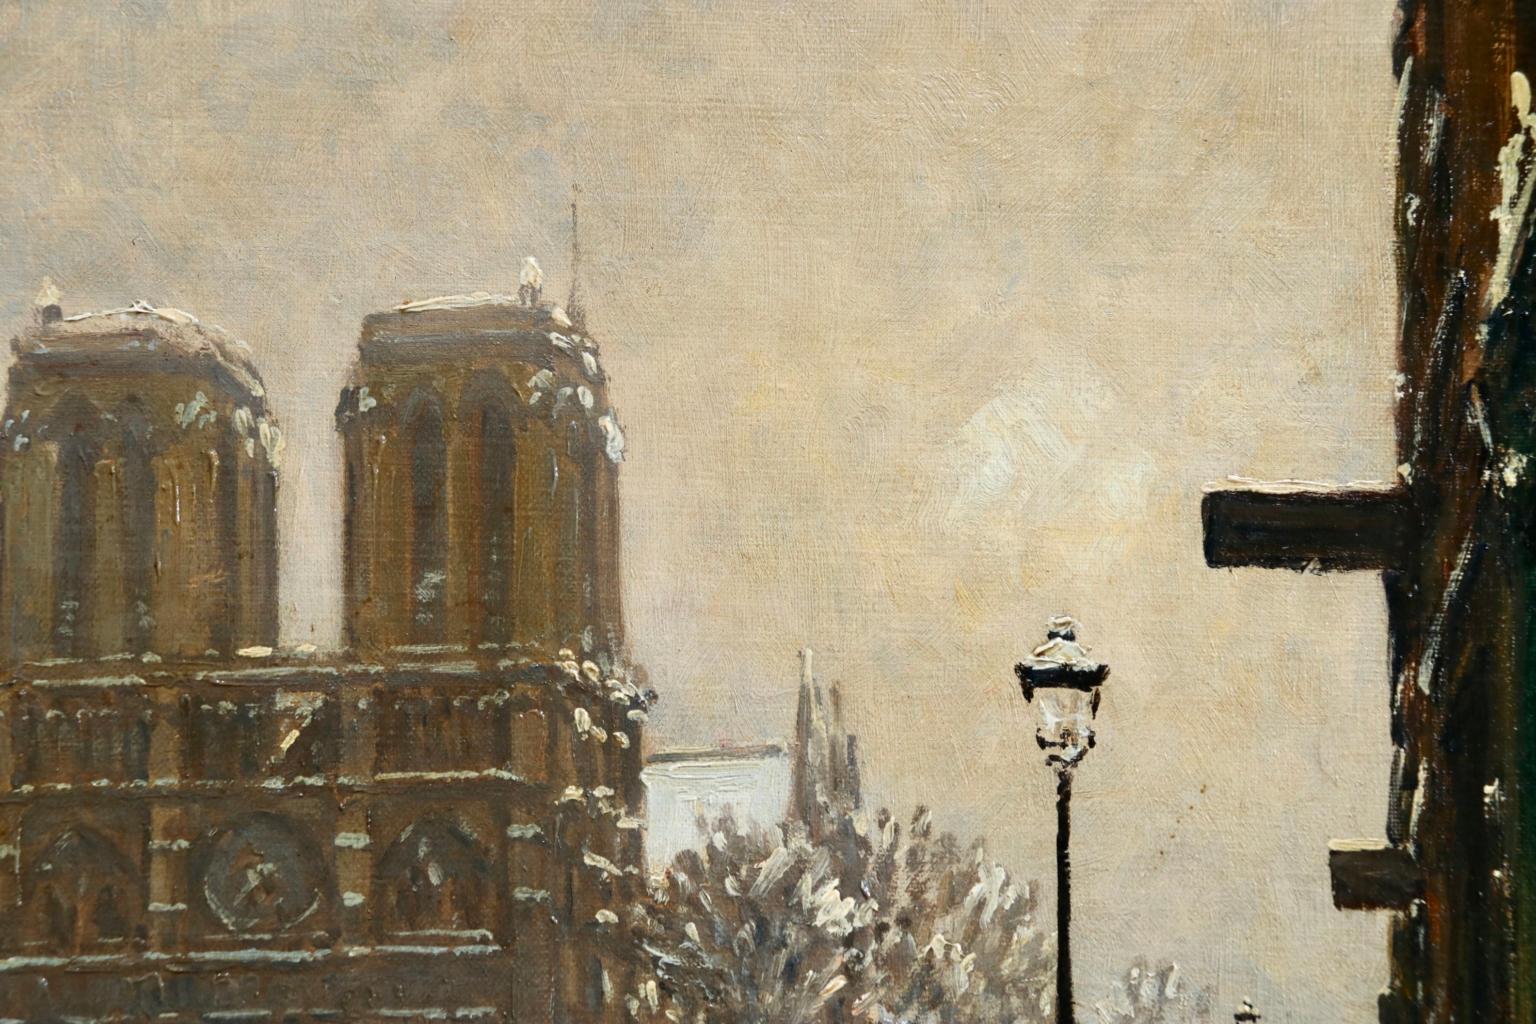 Notre Dame sur la neige - Paris - Figures in Winter Landscape by Henry Malfroy 4